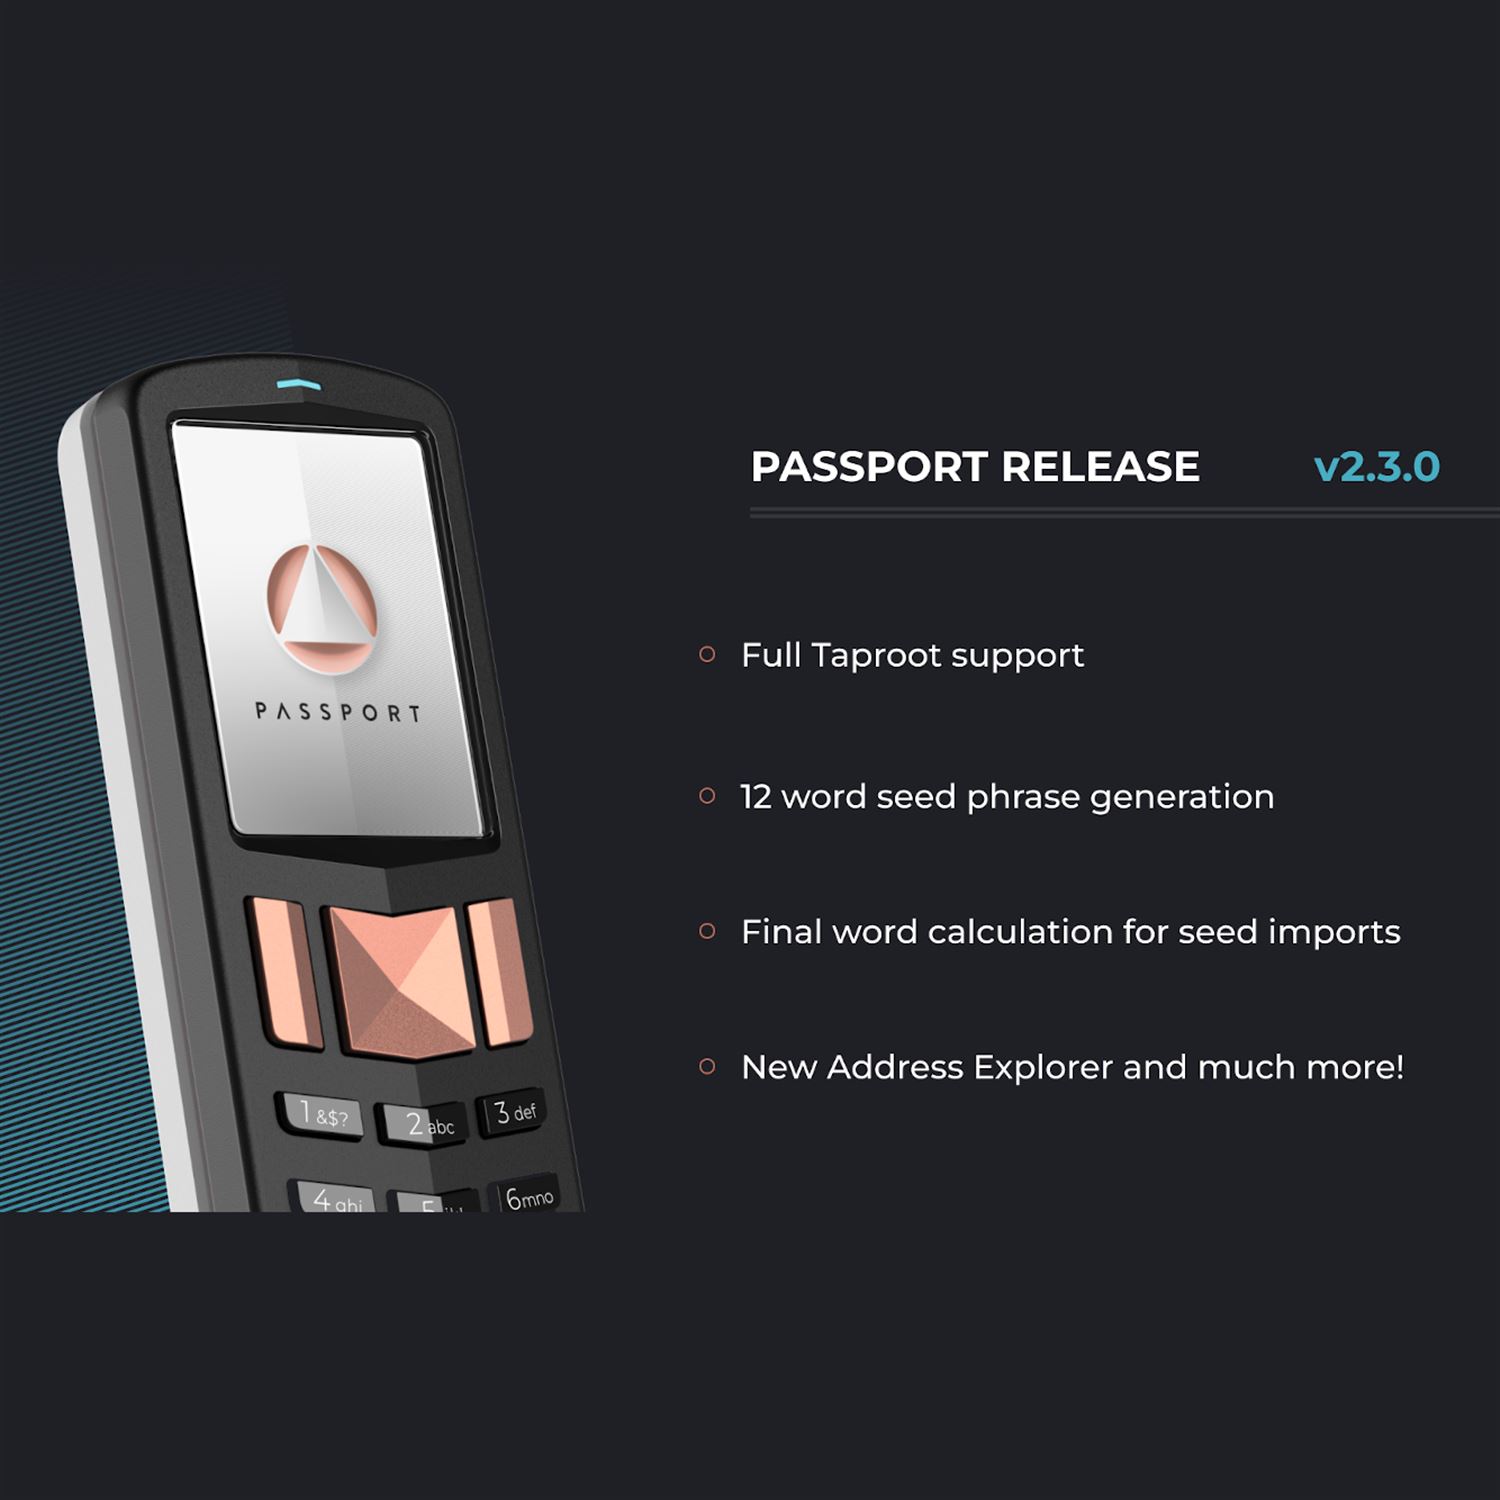 FOUNDATION Passport Firmware v2.3.0: 12 Word Seed Generation